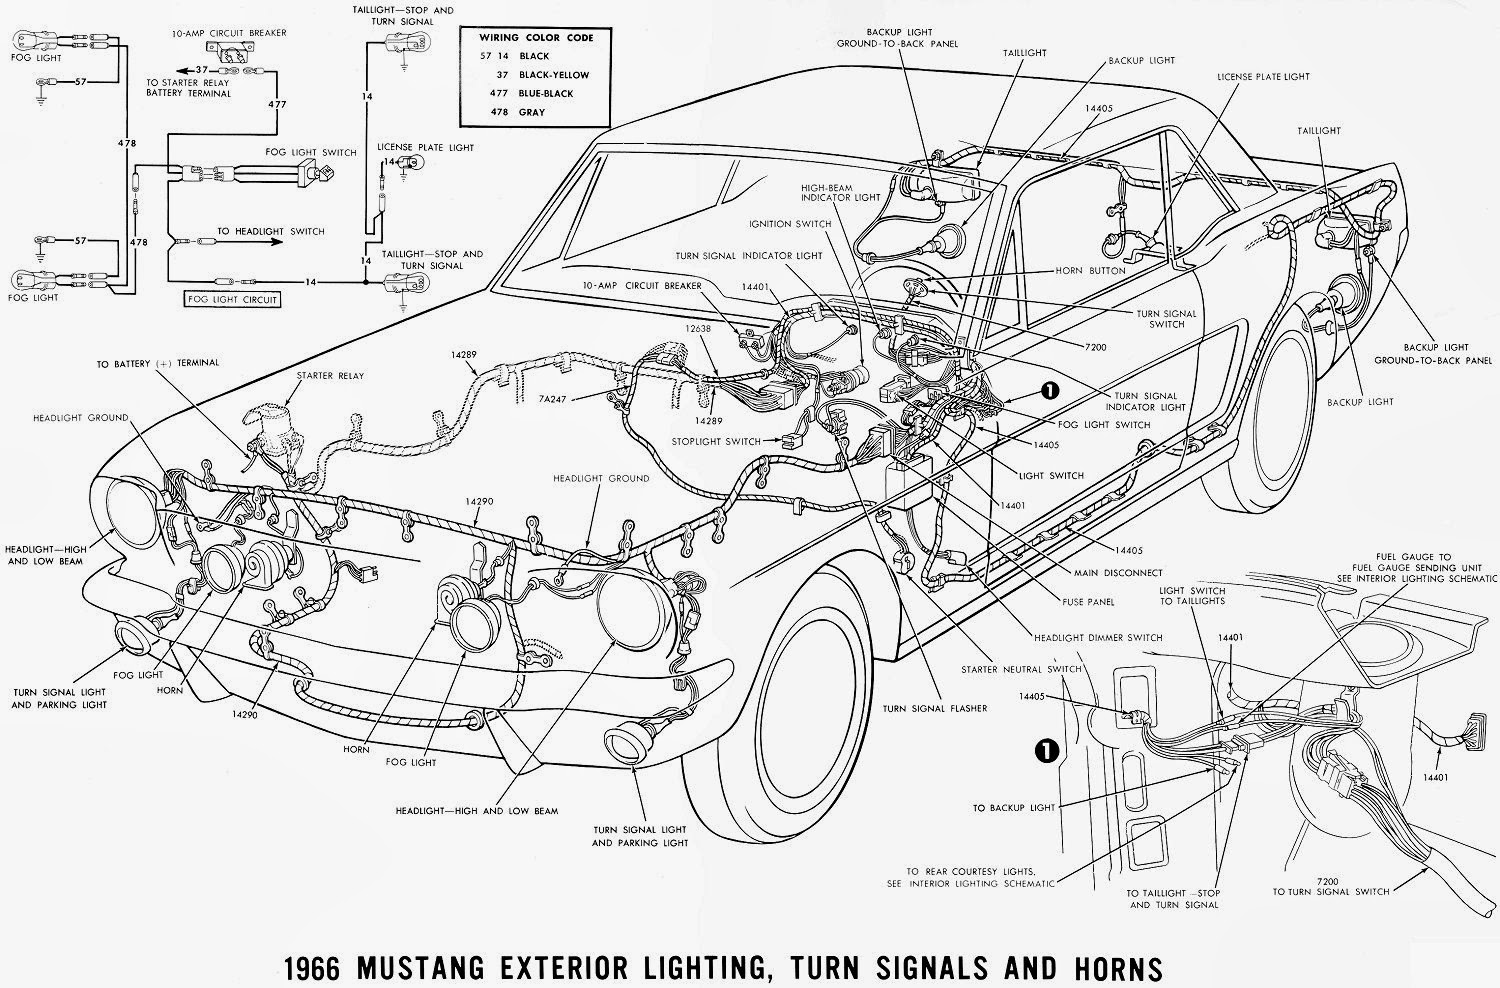 1965 Ford Mustang Wiring Diagram Pics